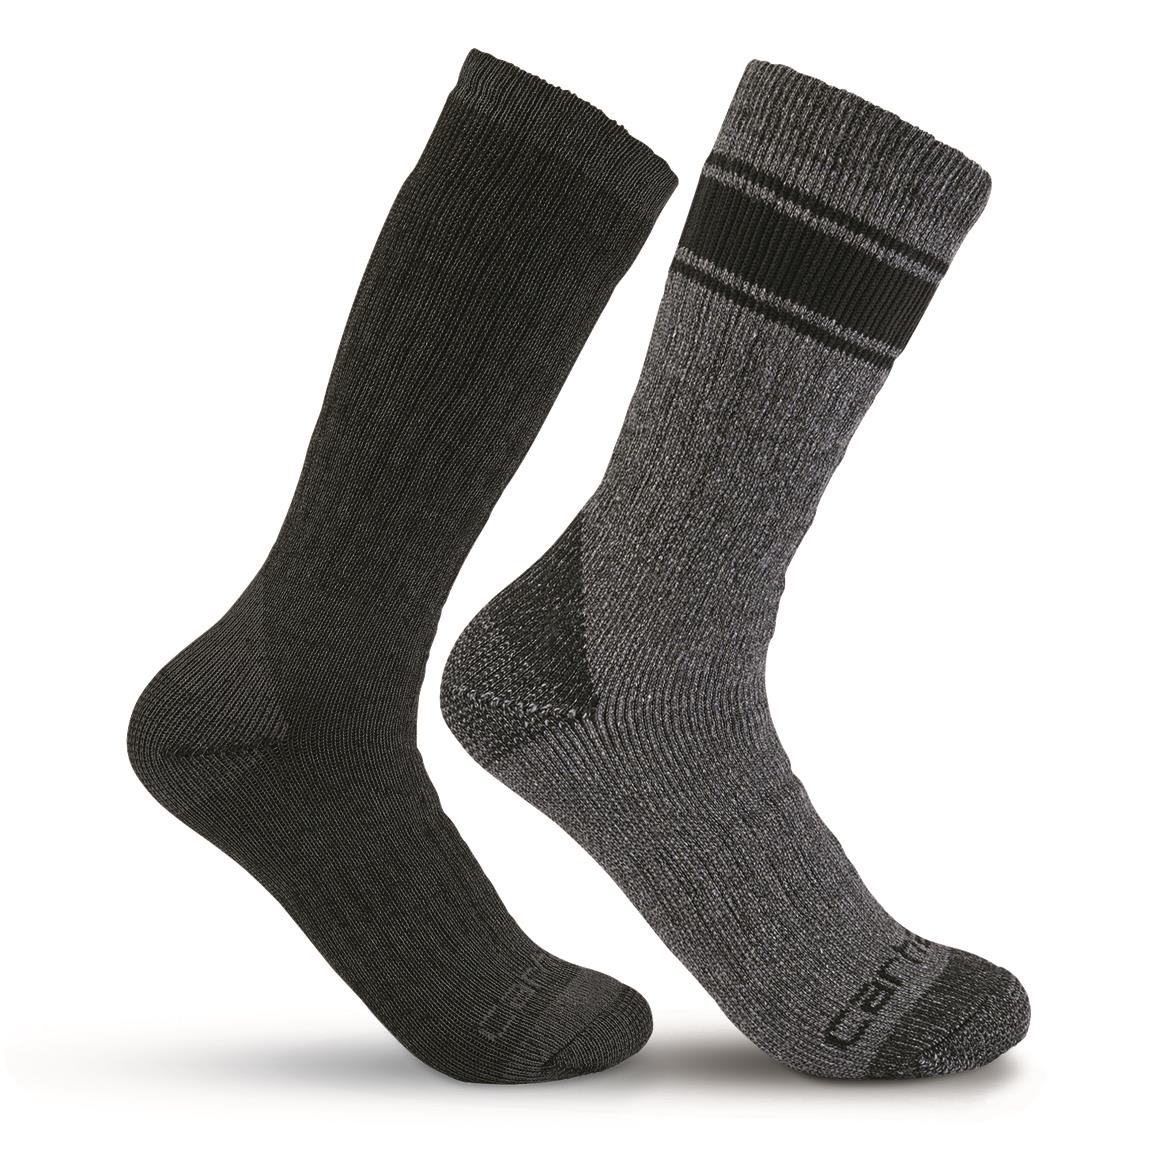 Carhartt Socks | Sportsman's Guide